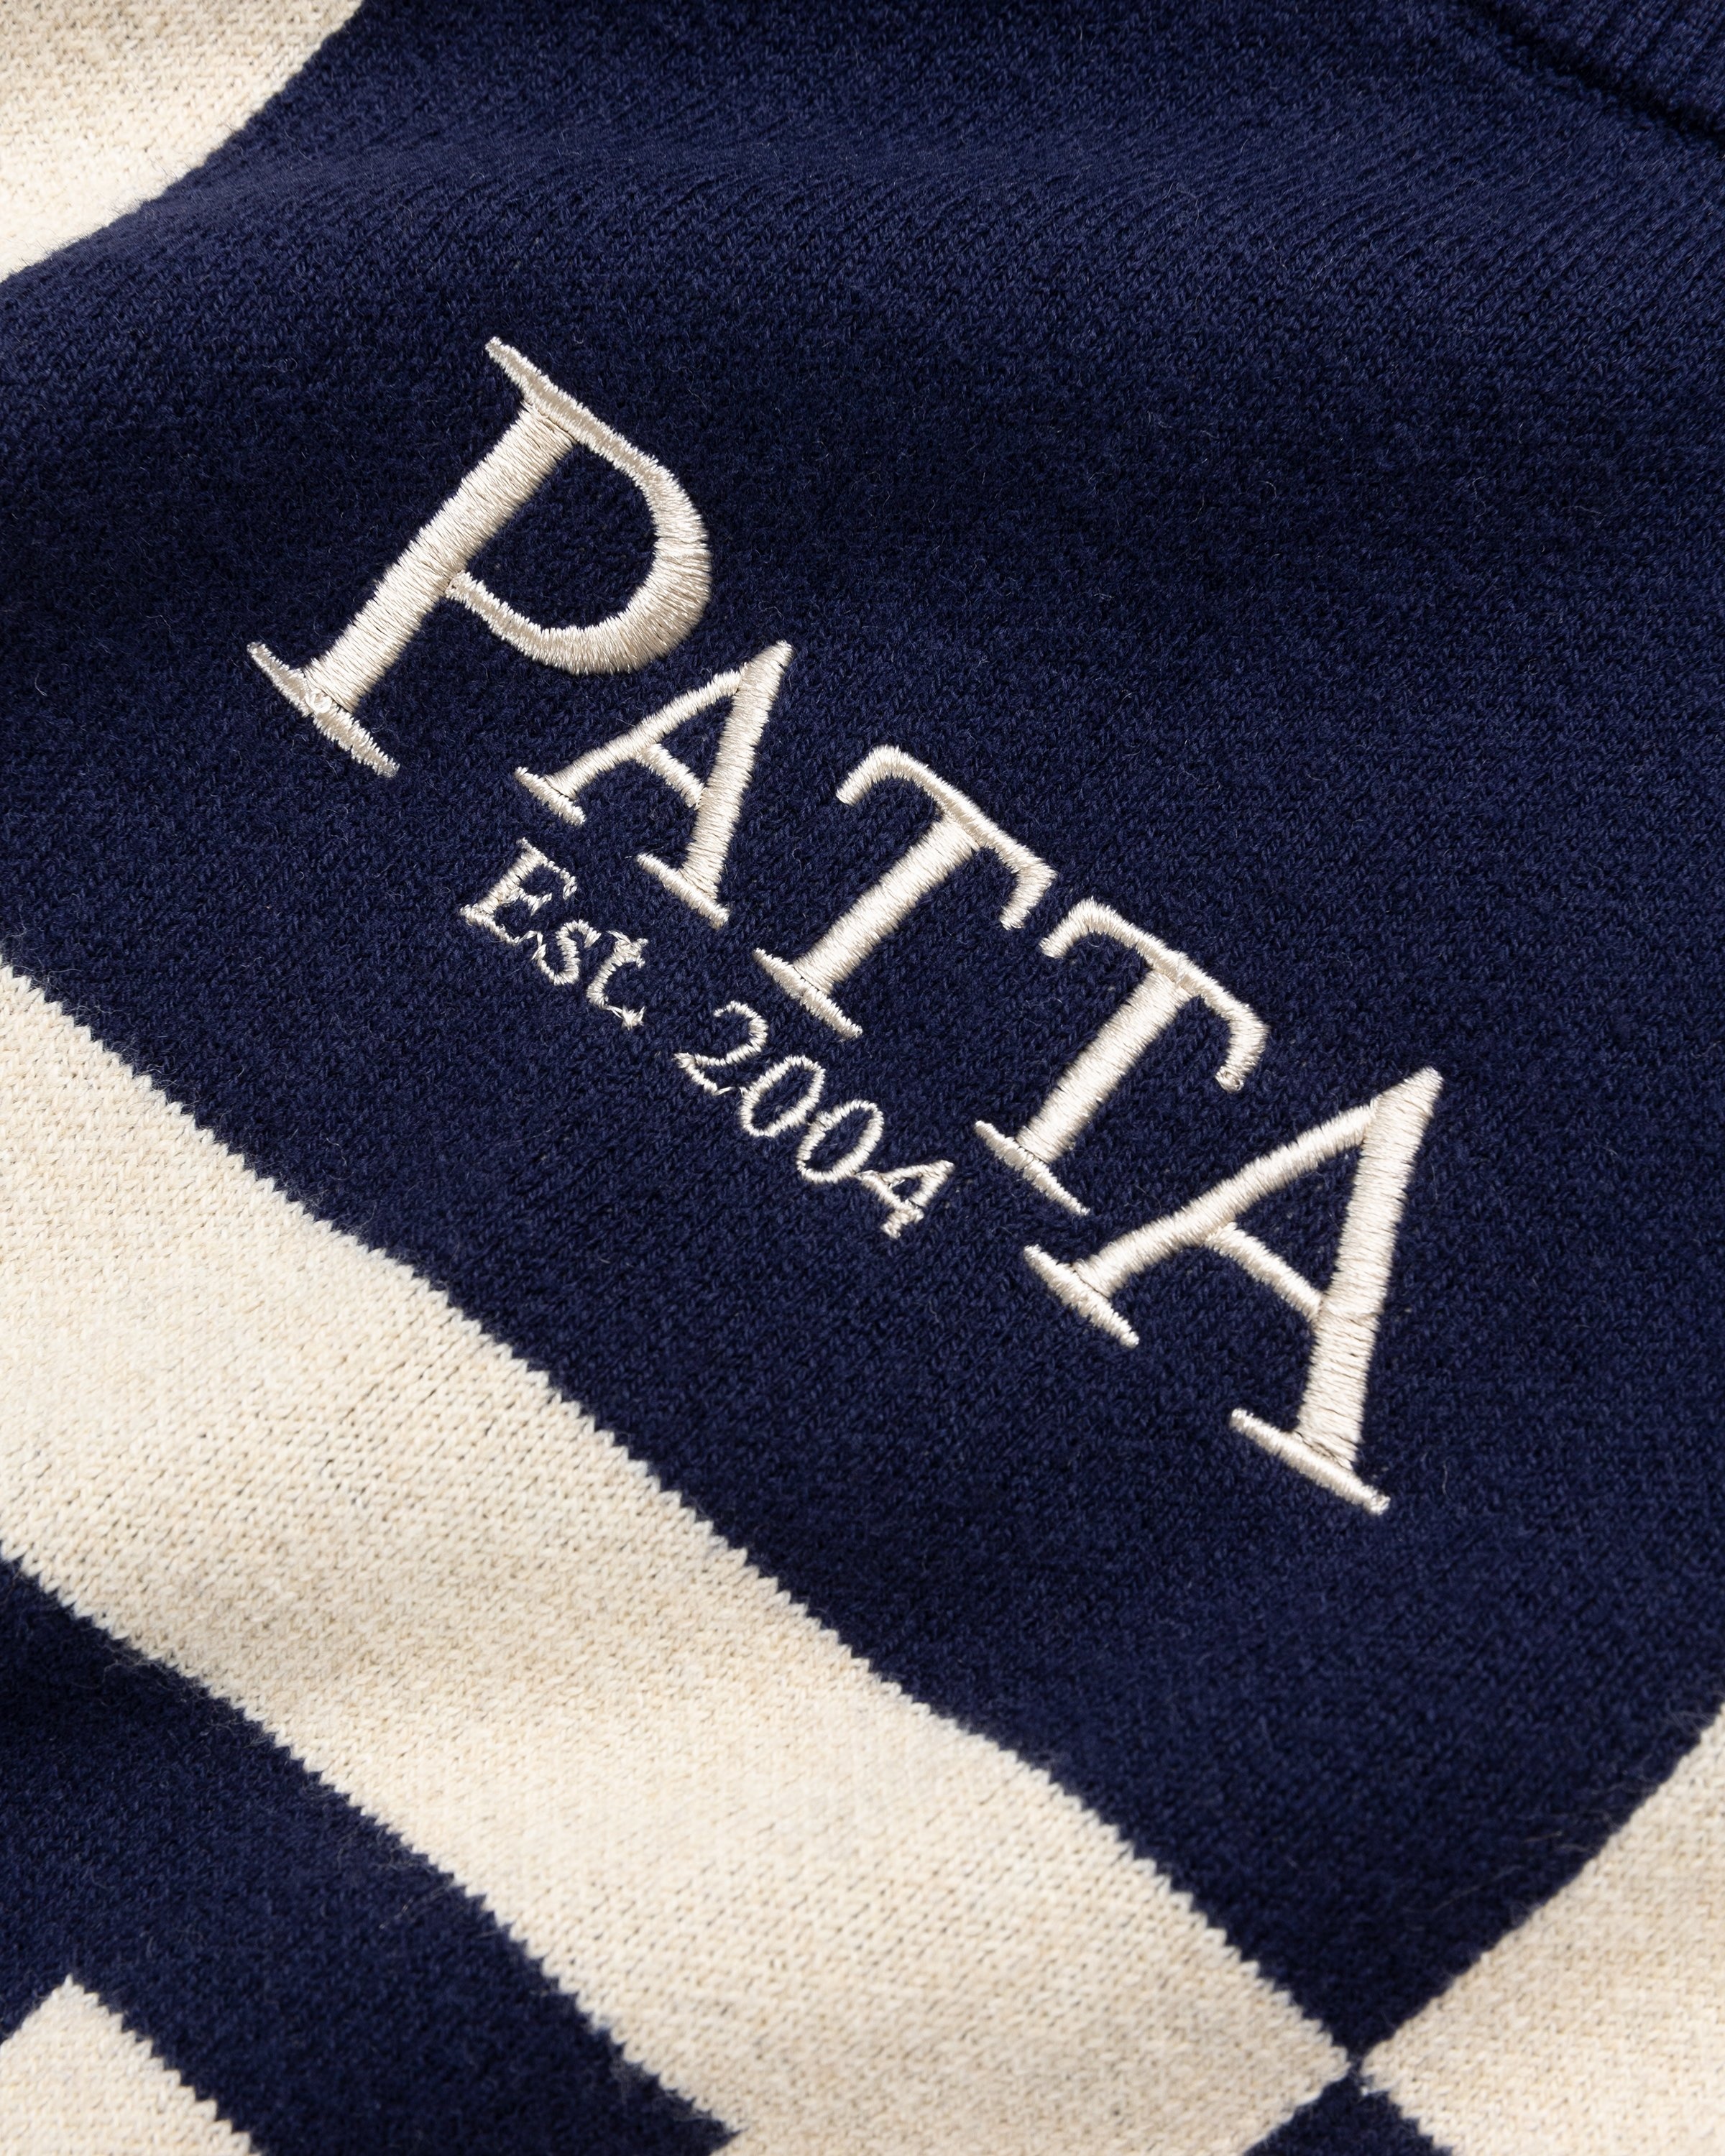 Patta – Alphabet Knitted Sweater Evening Blue/Pale Khaki - Knitwear - Green - Image 4